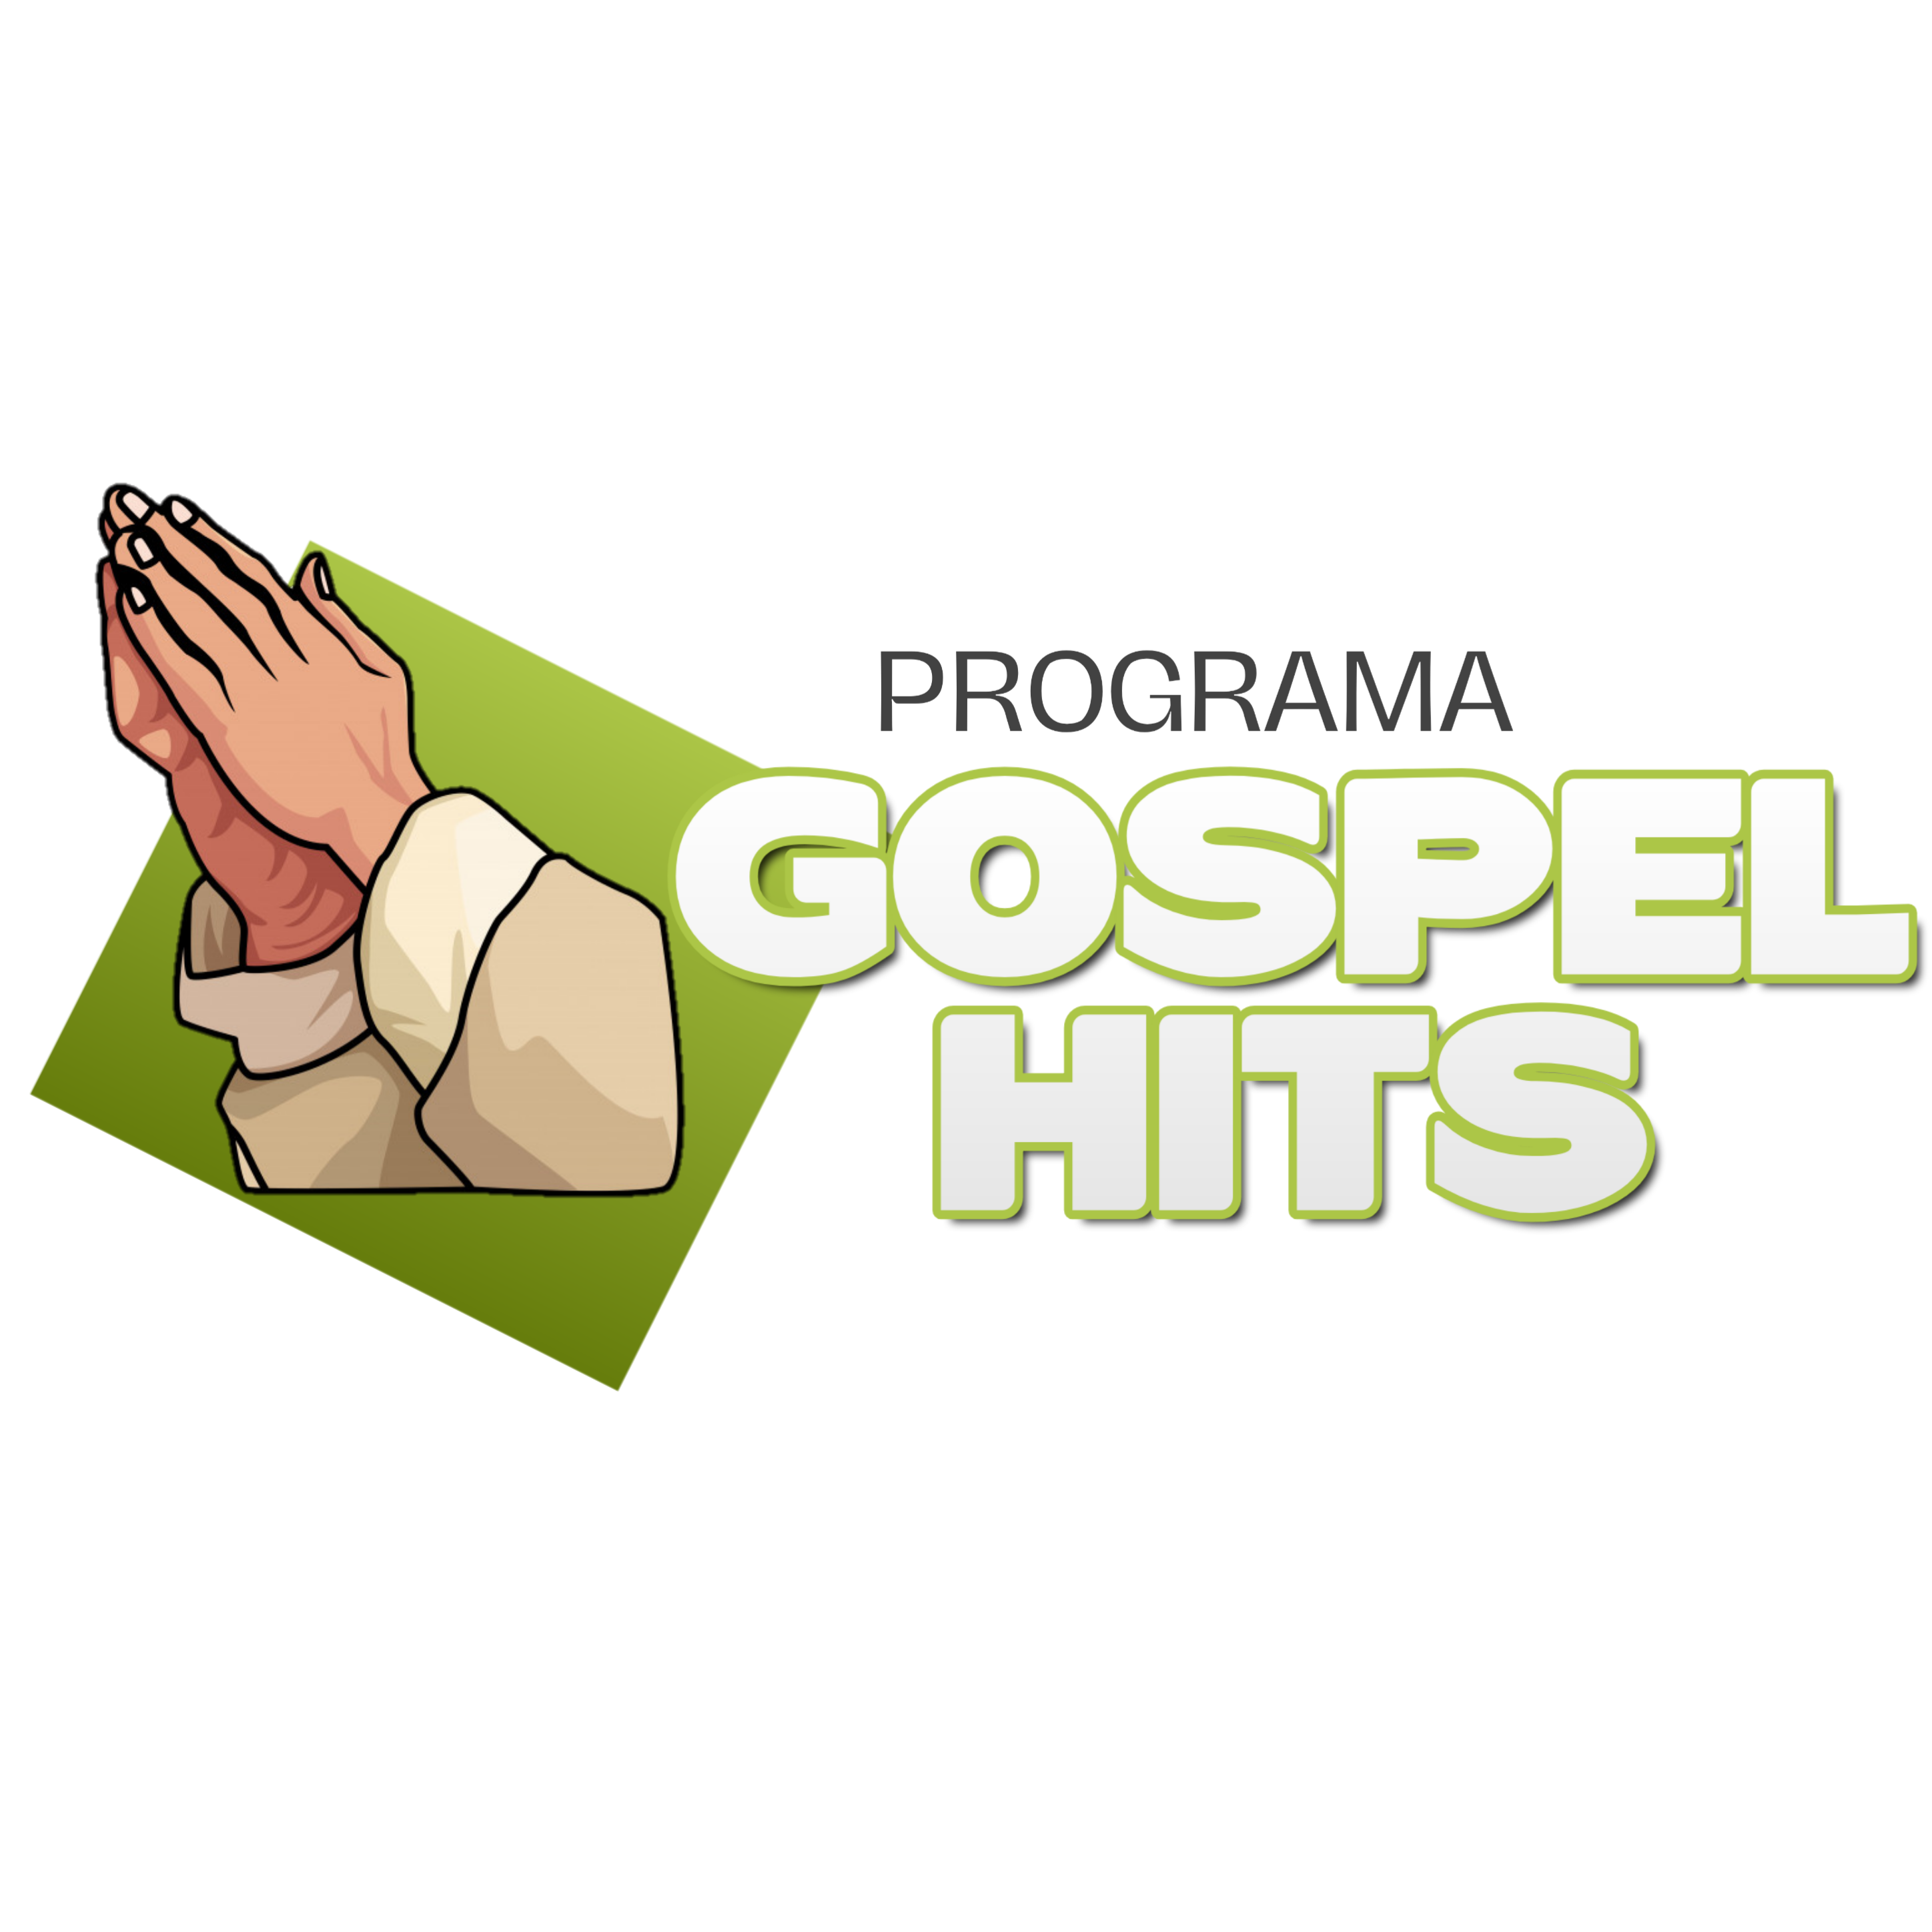 Programa Gospel Hits